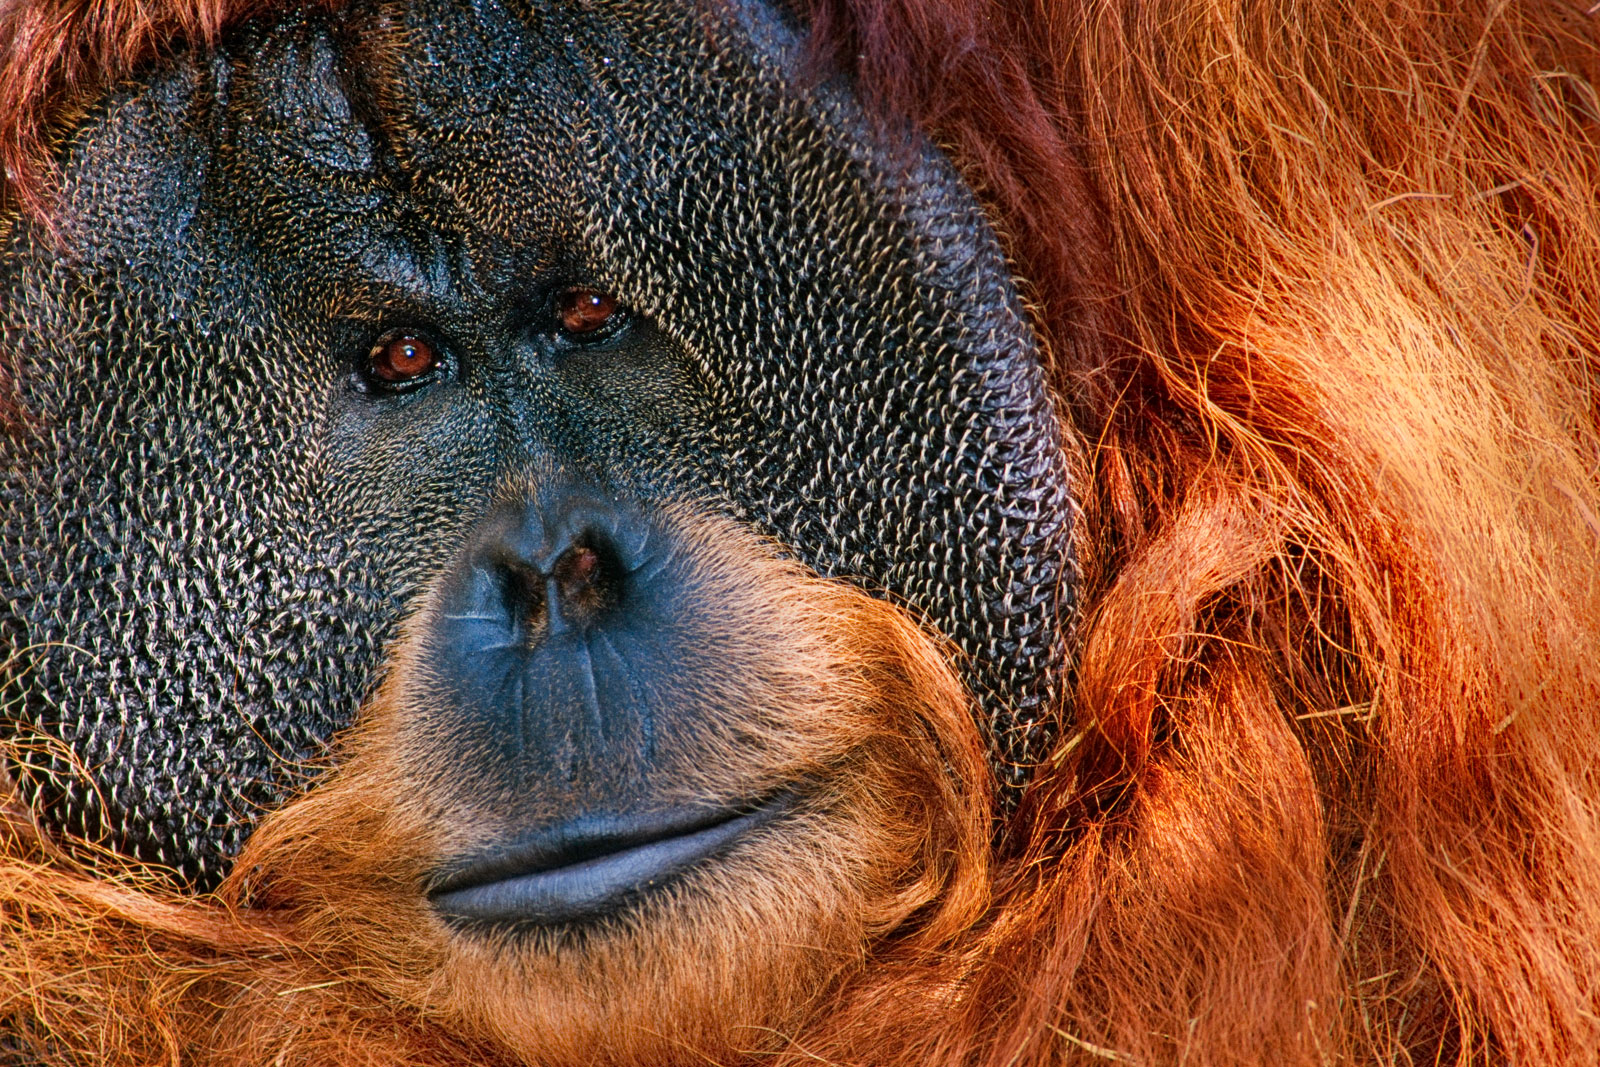 Bornean orangutan, native to Borneo